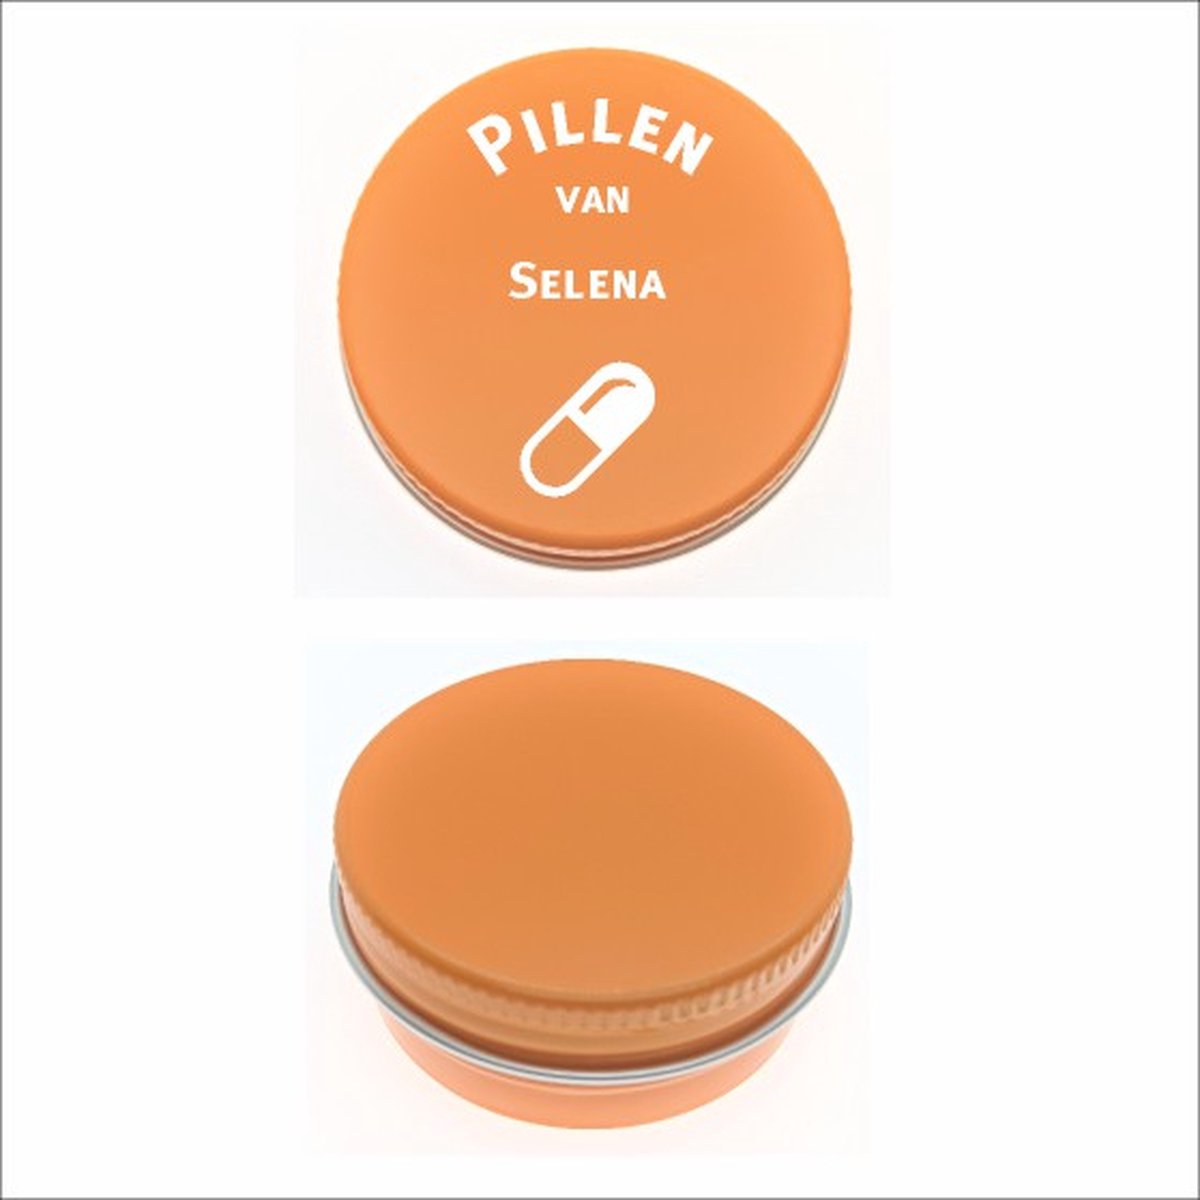 Pillen Blikje Met Naam Gravering - Selena